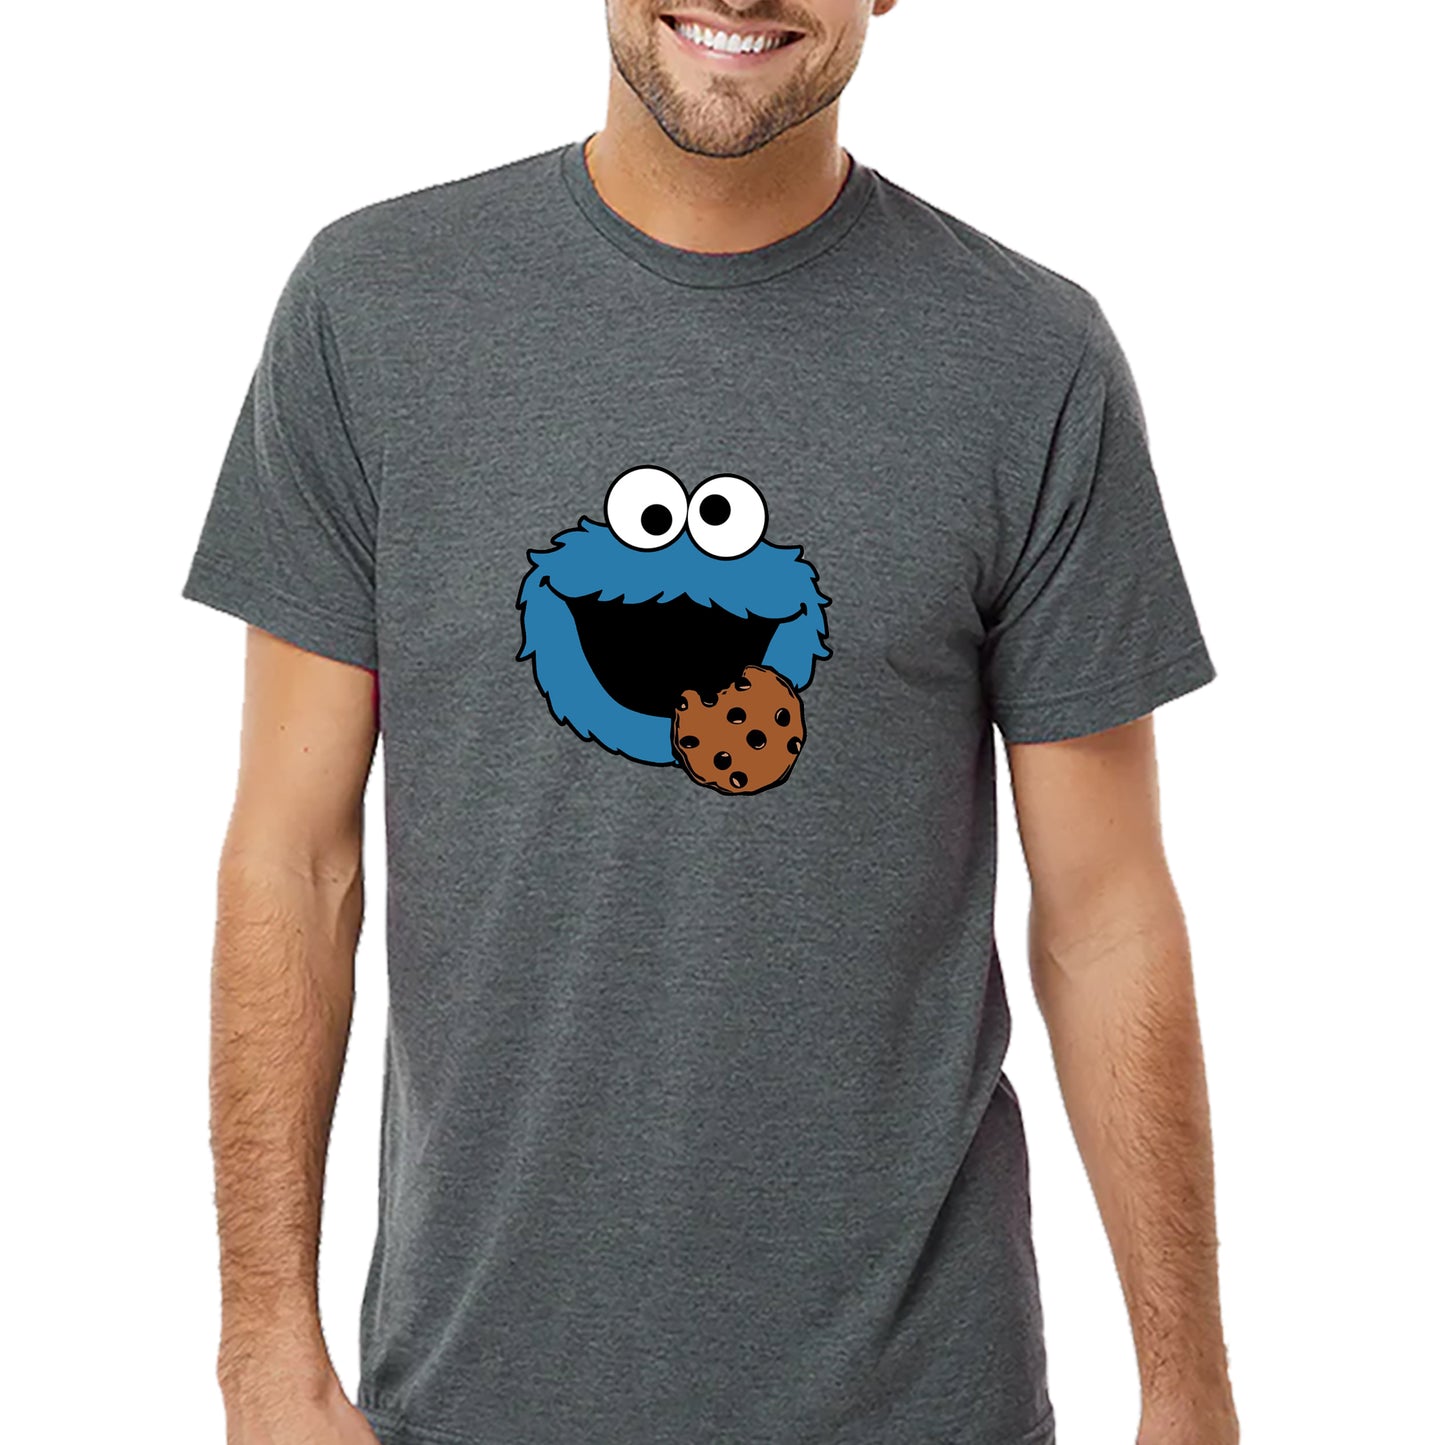 Cookie Monster T-shirt